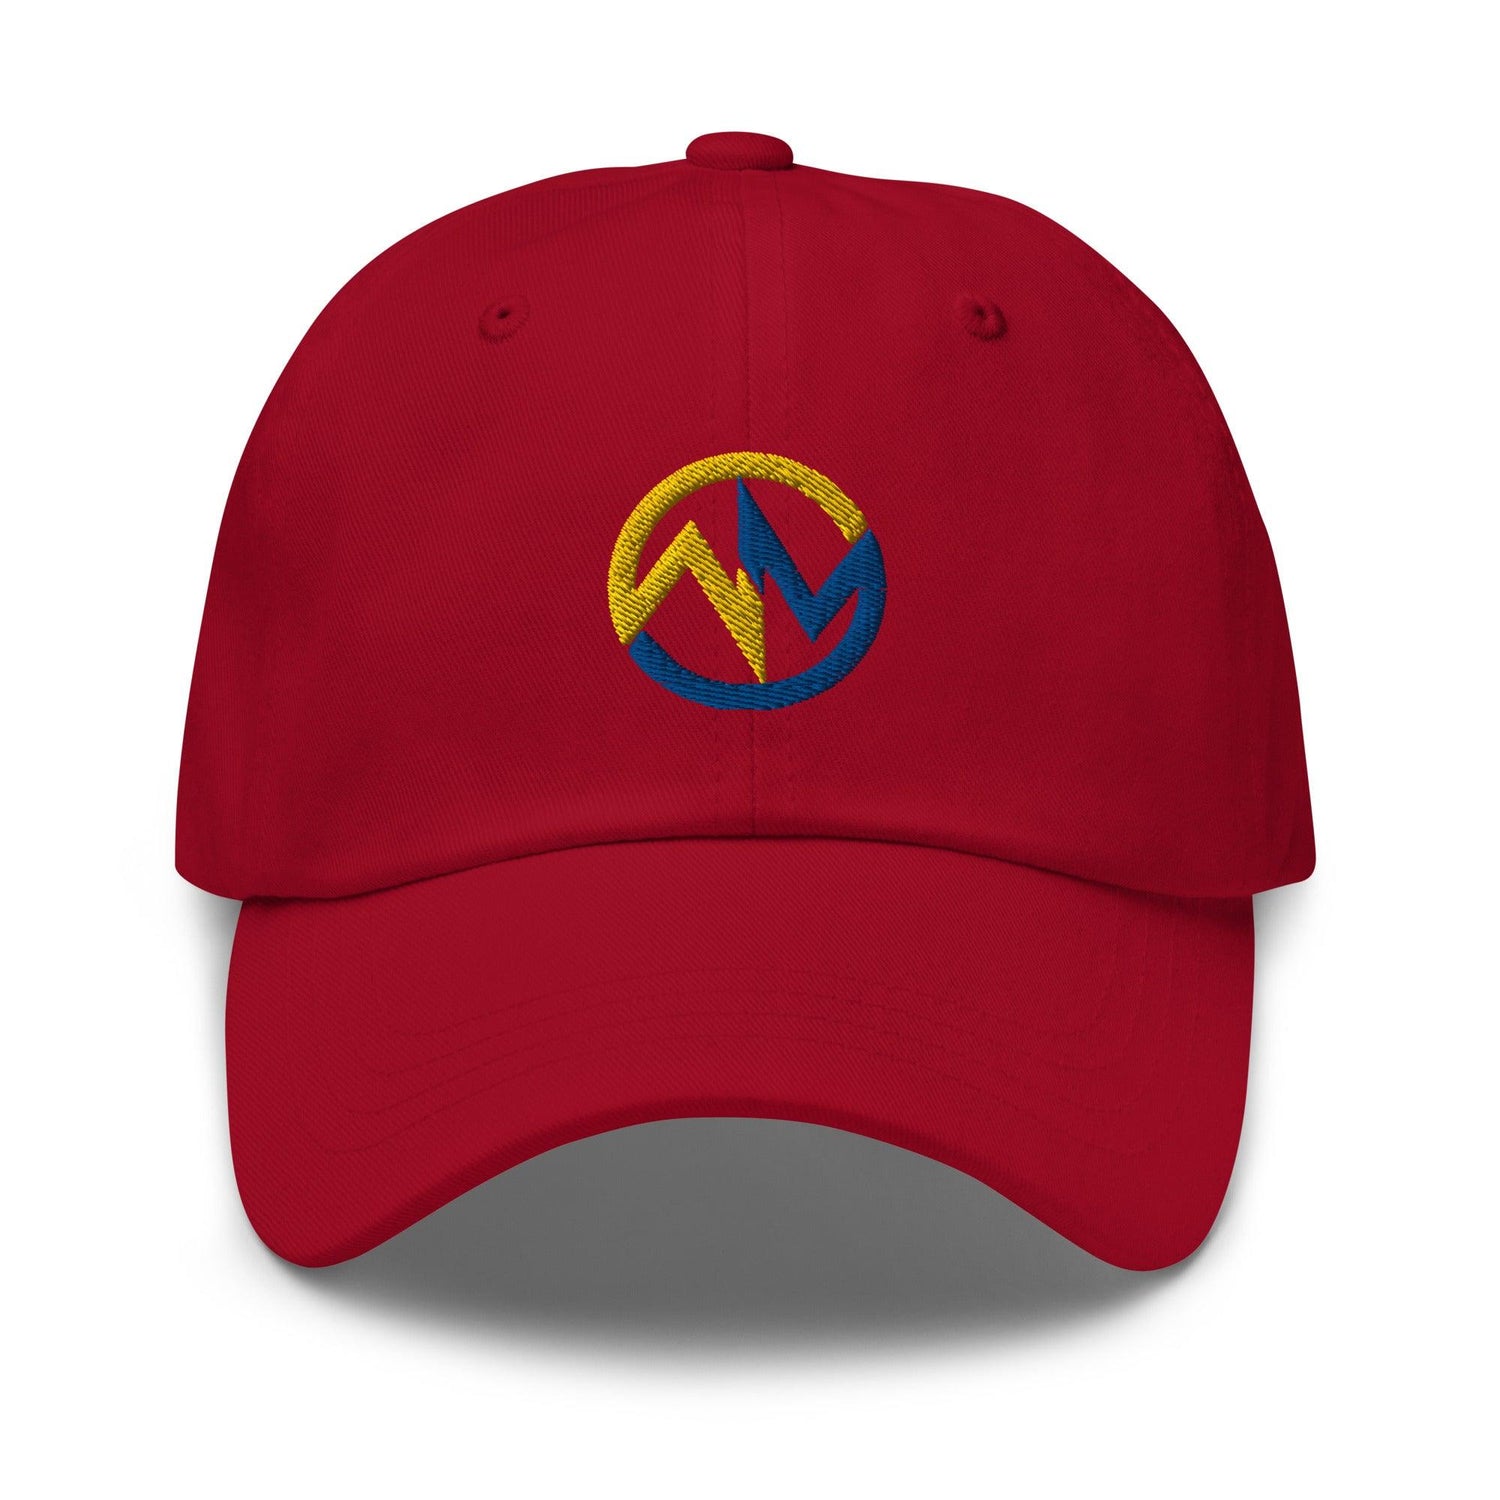 Wesley McCormick "Essential" hat - Fan Arch